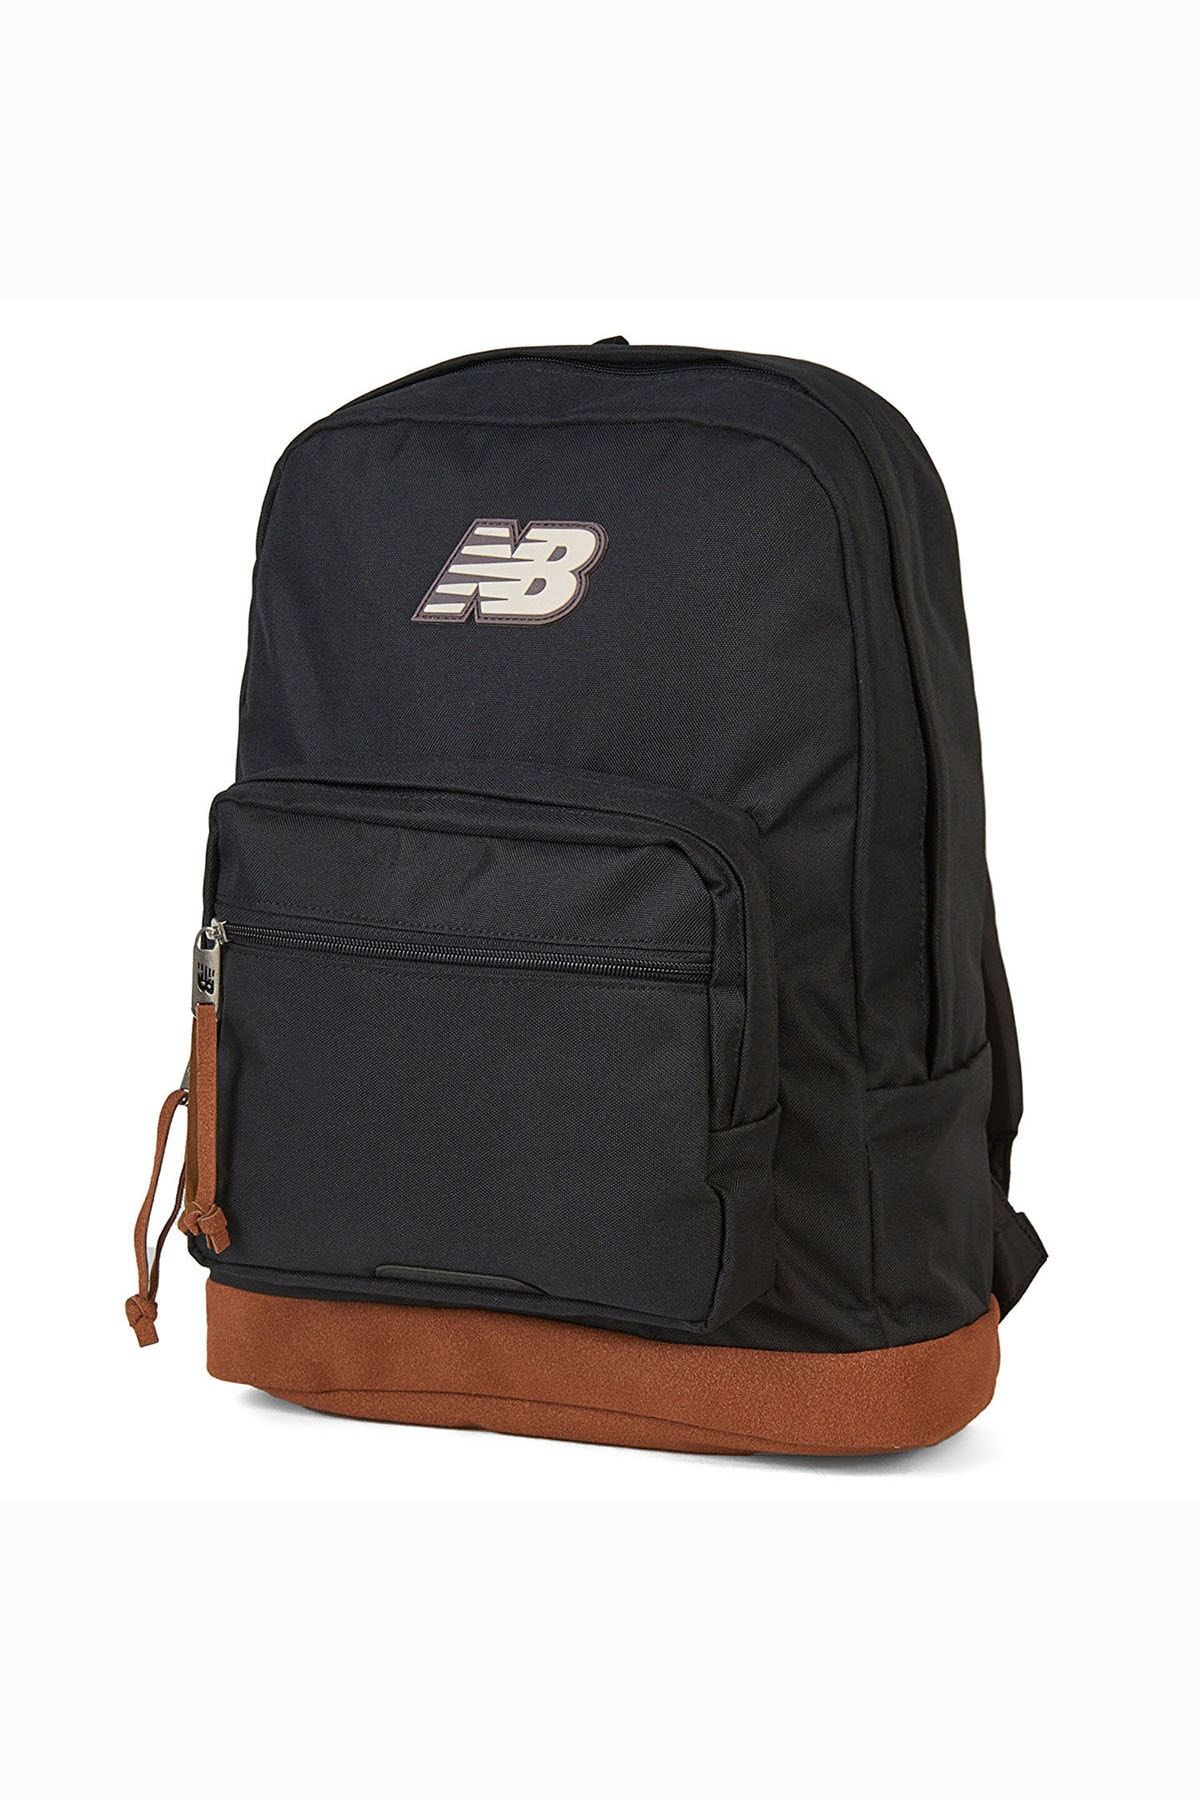 New Balance Çanta Nb Backpack Anb3202-bk